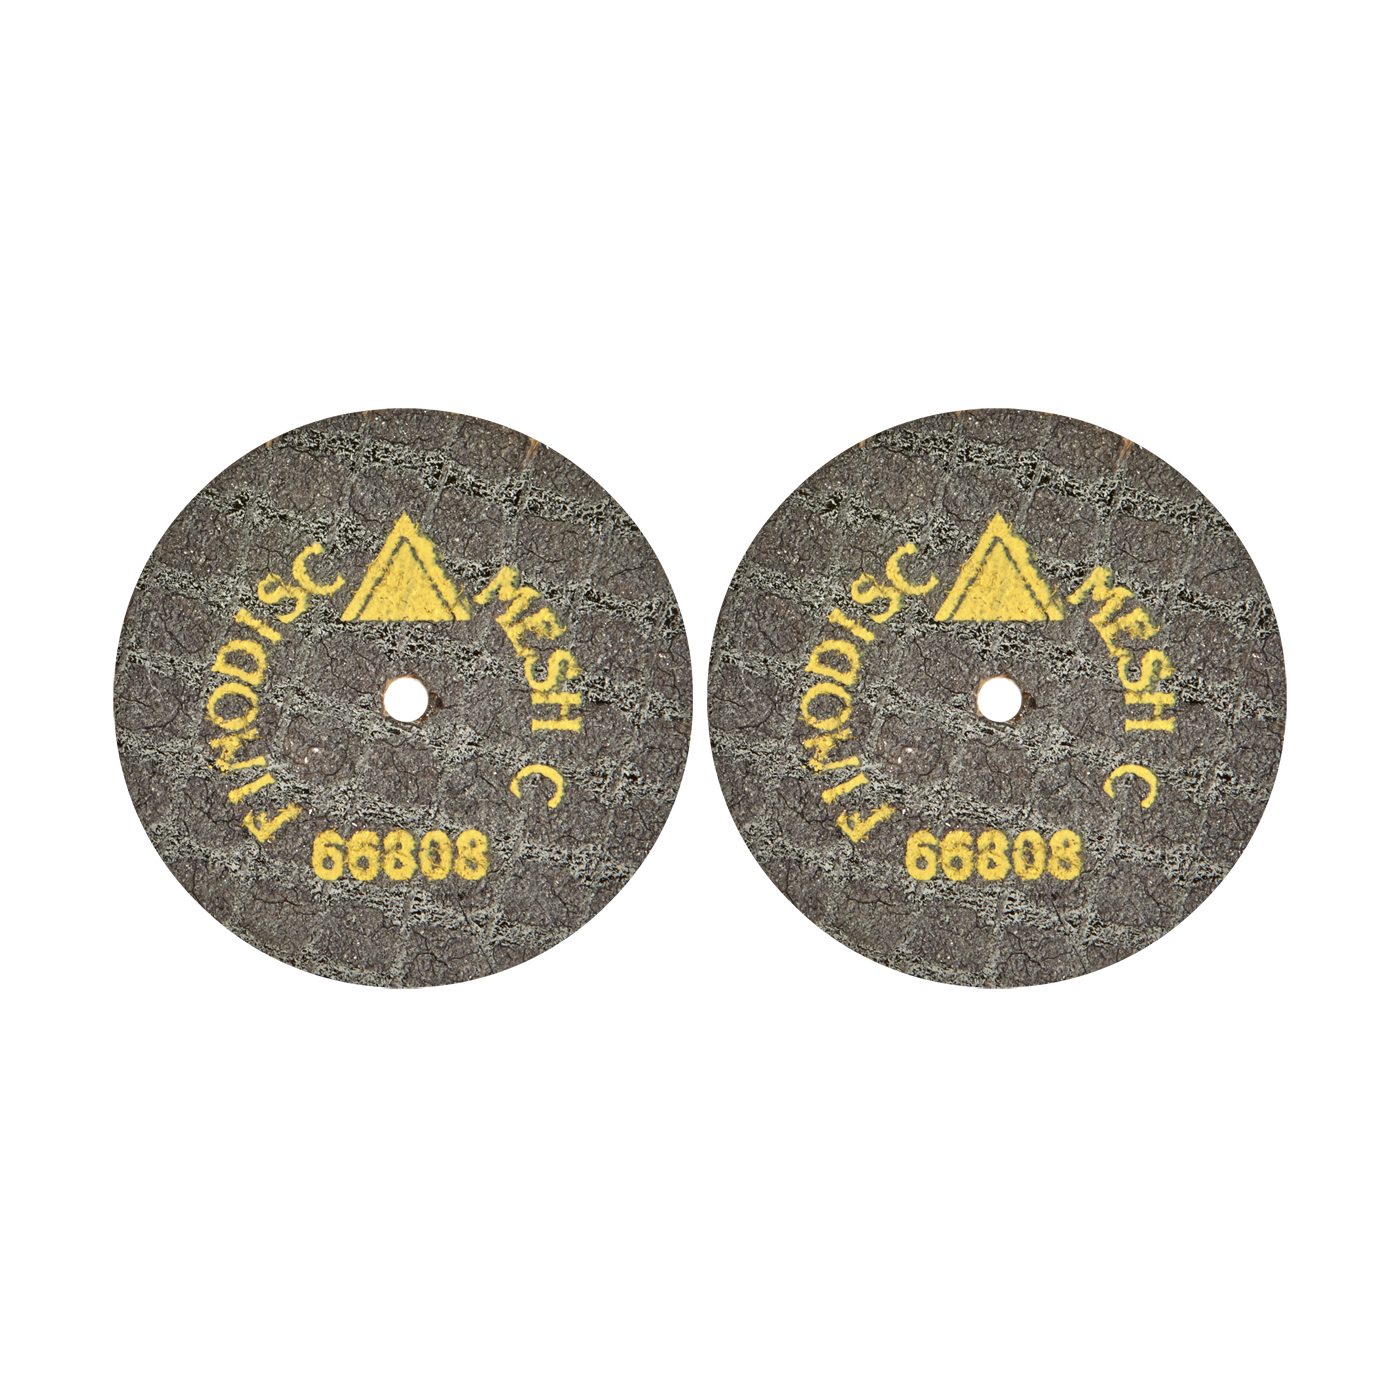 FINODISC MESH C separating discs, trial pack, ø 22 x 0.5 mm - 2 pieces